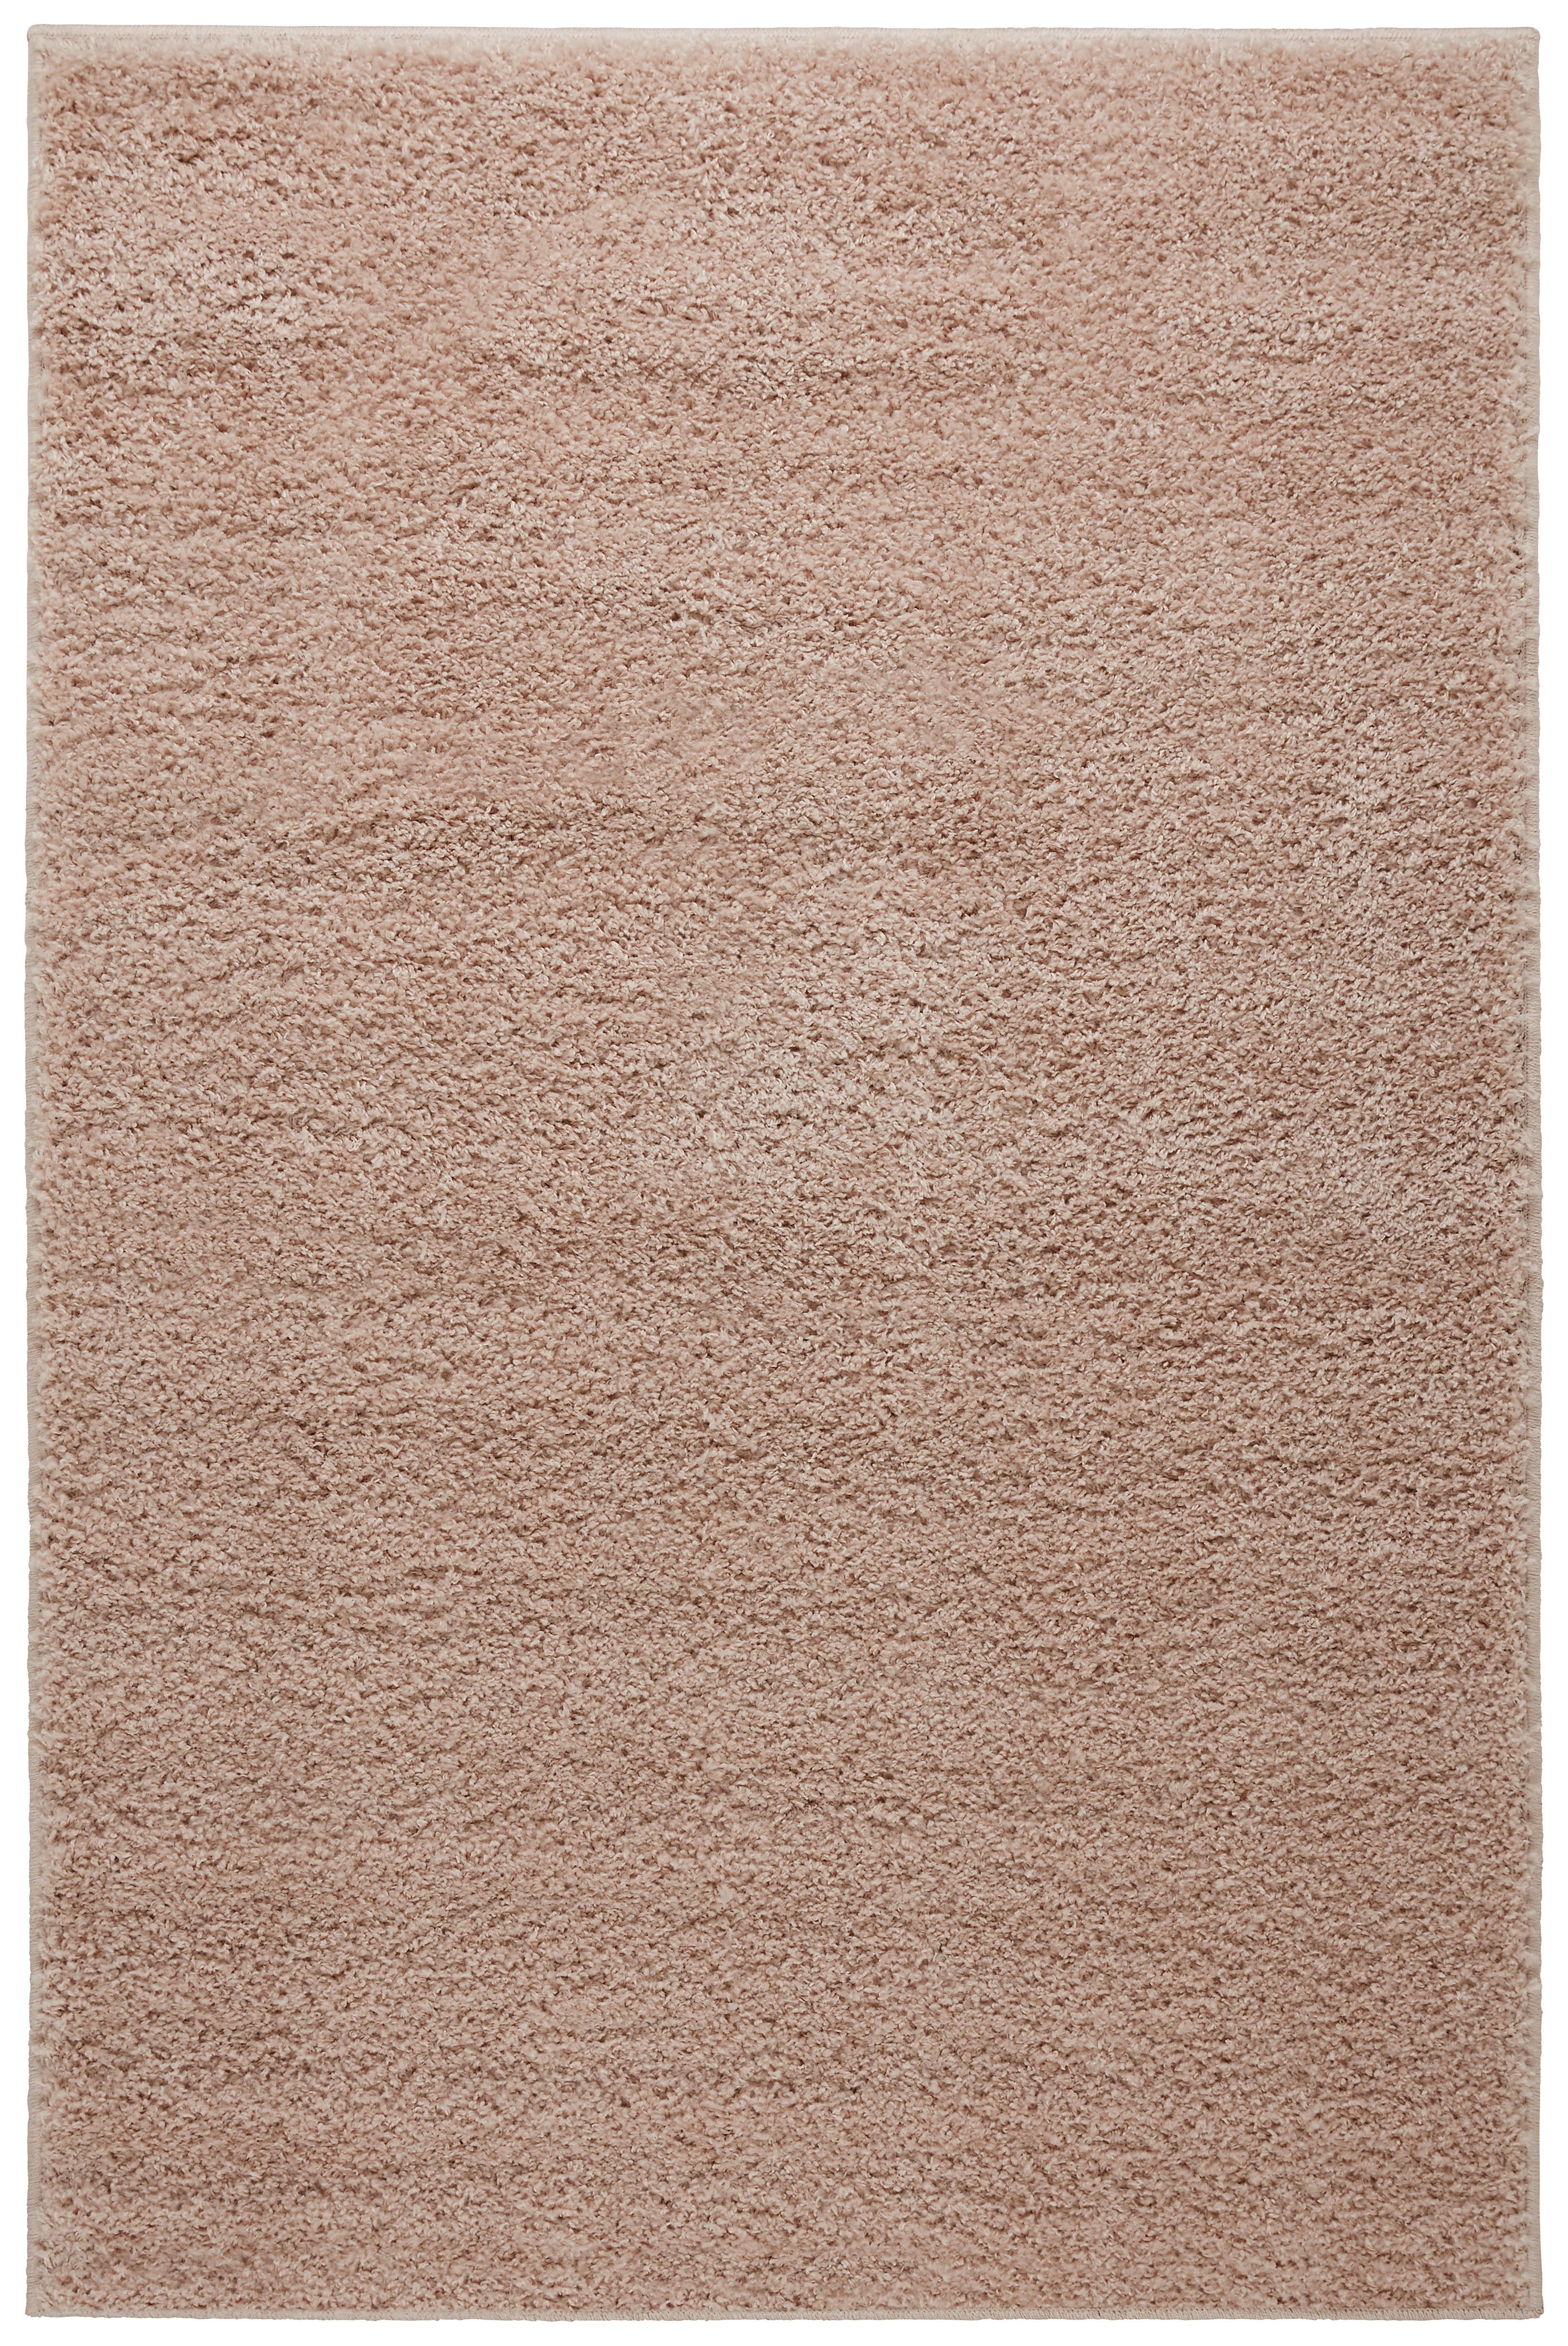 Hochflorteppich Bono in Rosa ca. 120x175cm - Rosa, Textil (120/175cm) - Modern Living